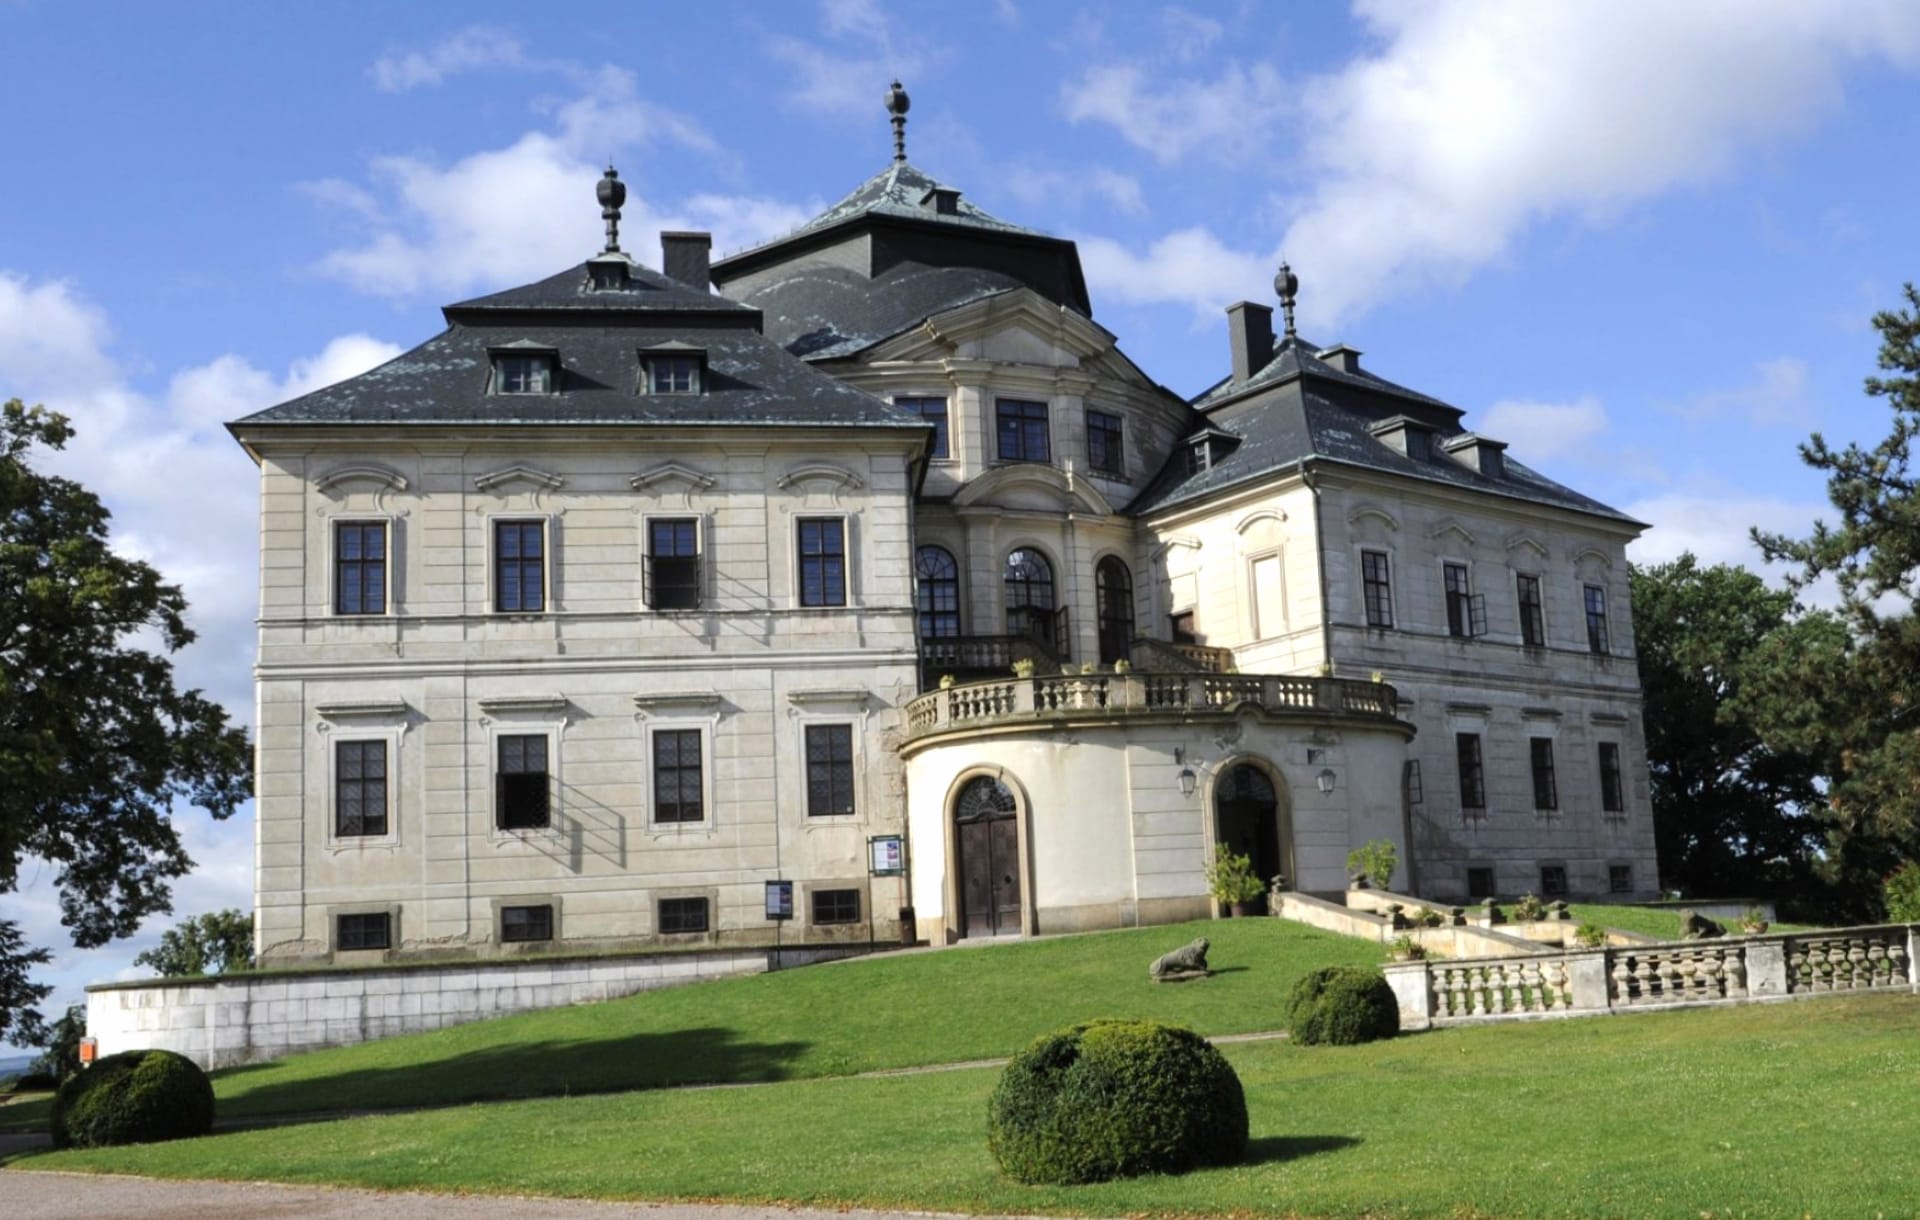 Karlova Koruna Chateau at 1280 x 960 size wallpapers HD quality